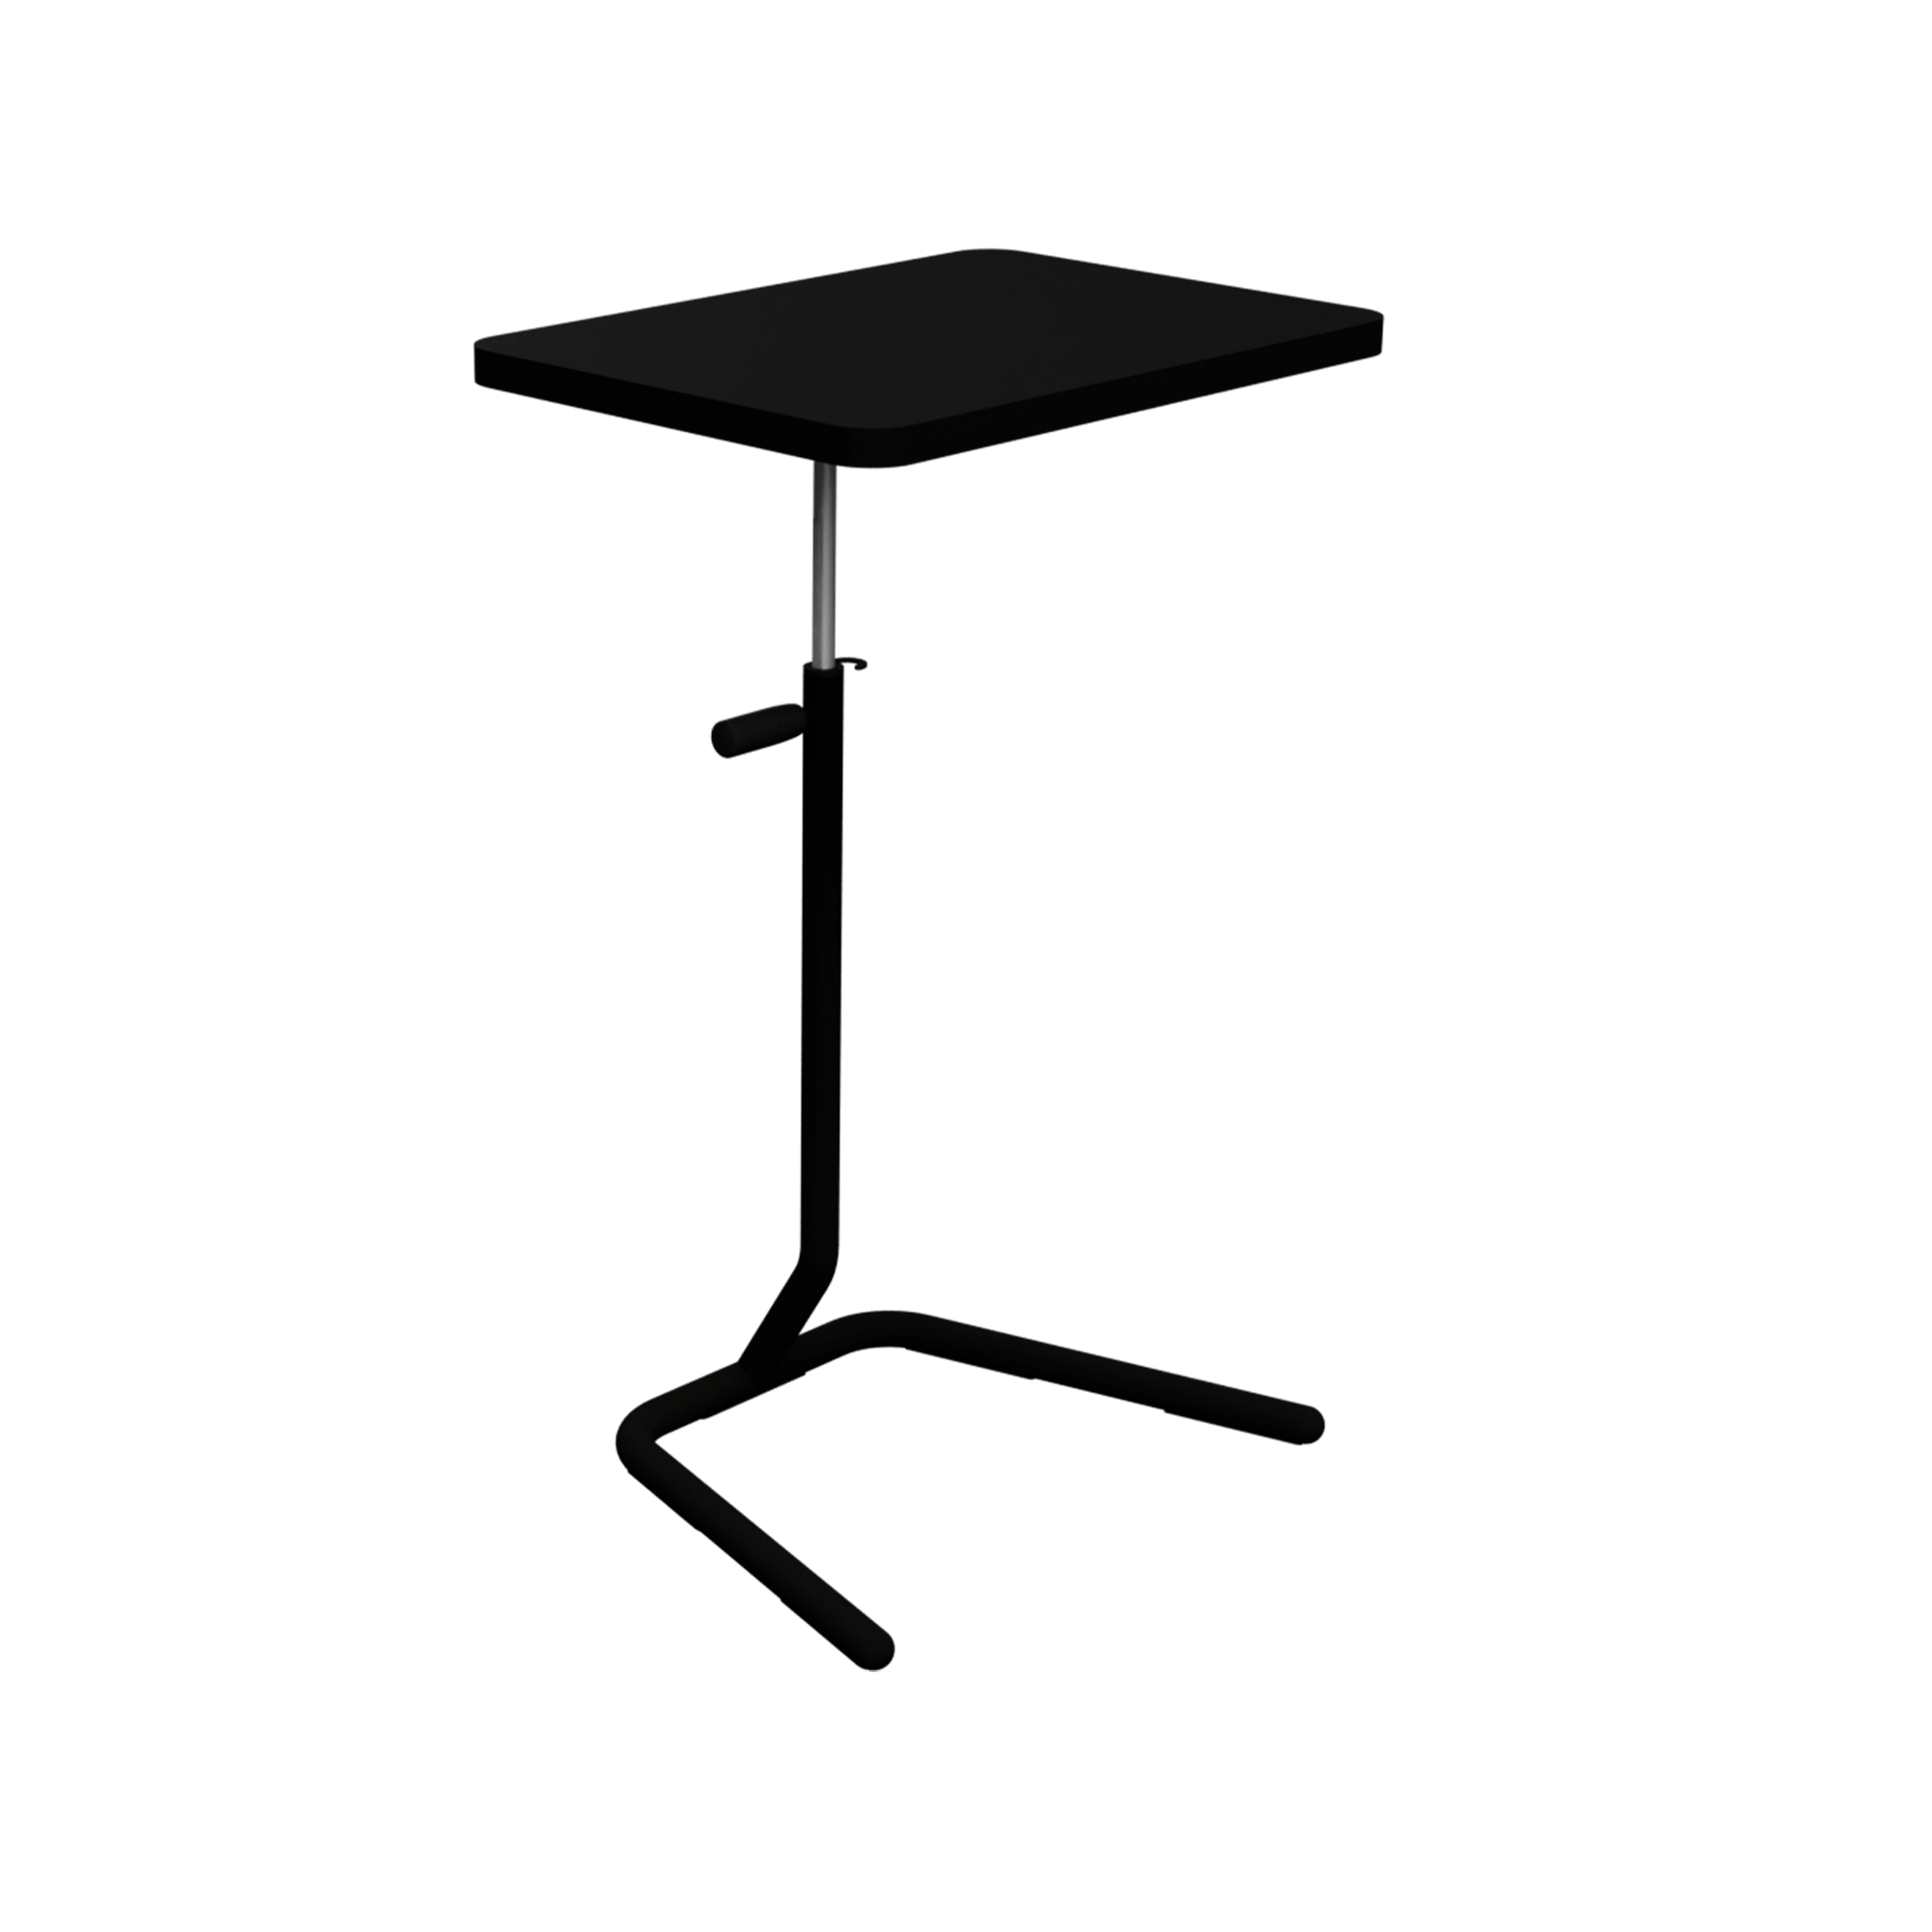 Adjustable height work table.